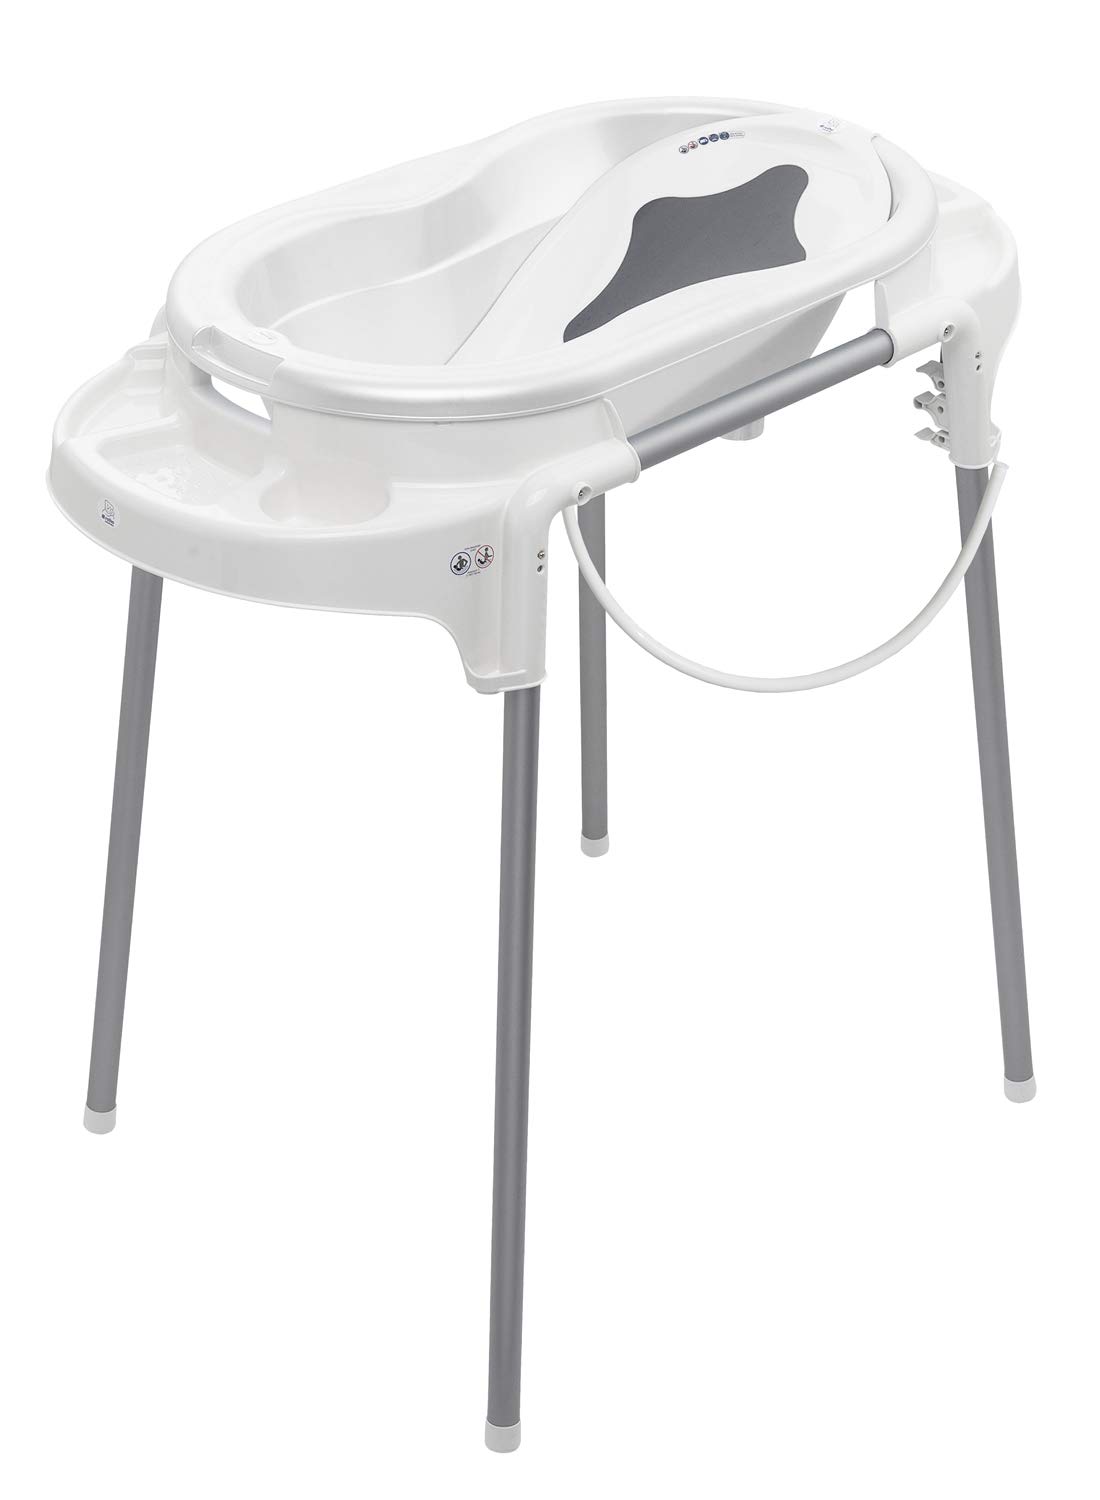 Rotho Babydesign TOP 21042 0001 01 Bath Station with Baby Bathtub, Bath Stand, Bath Insert and Drain Hose, 0-12 Months, White